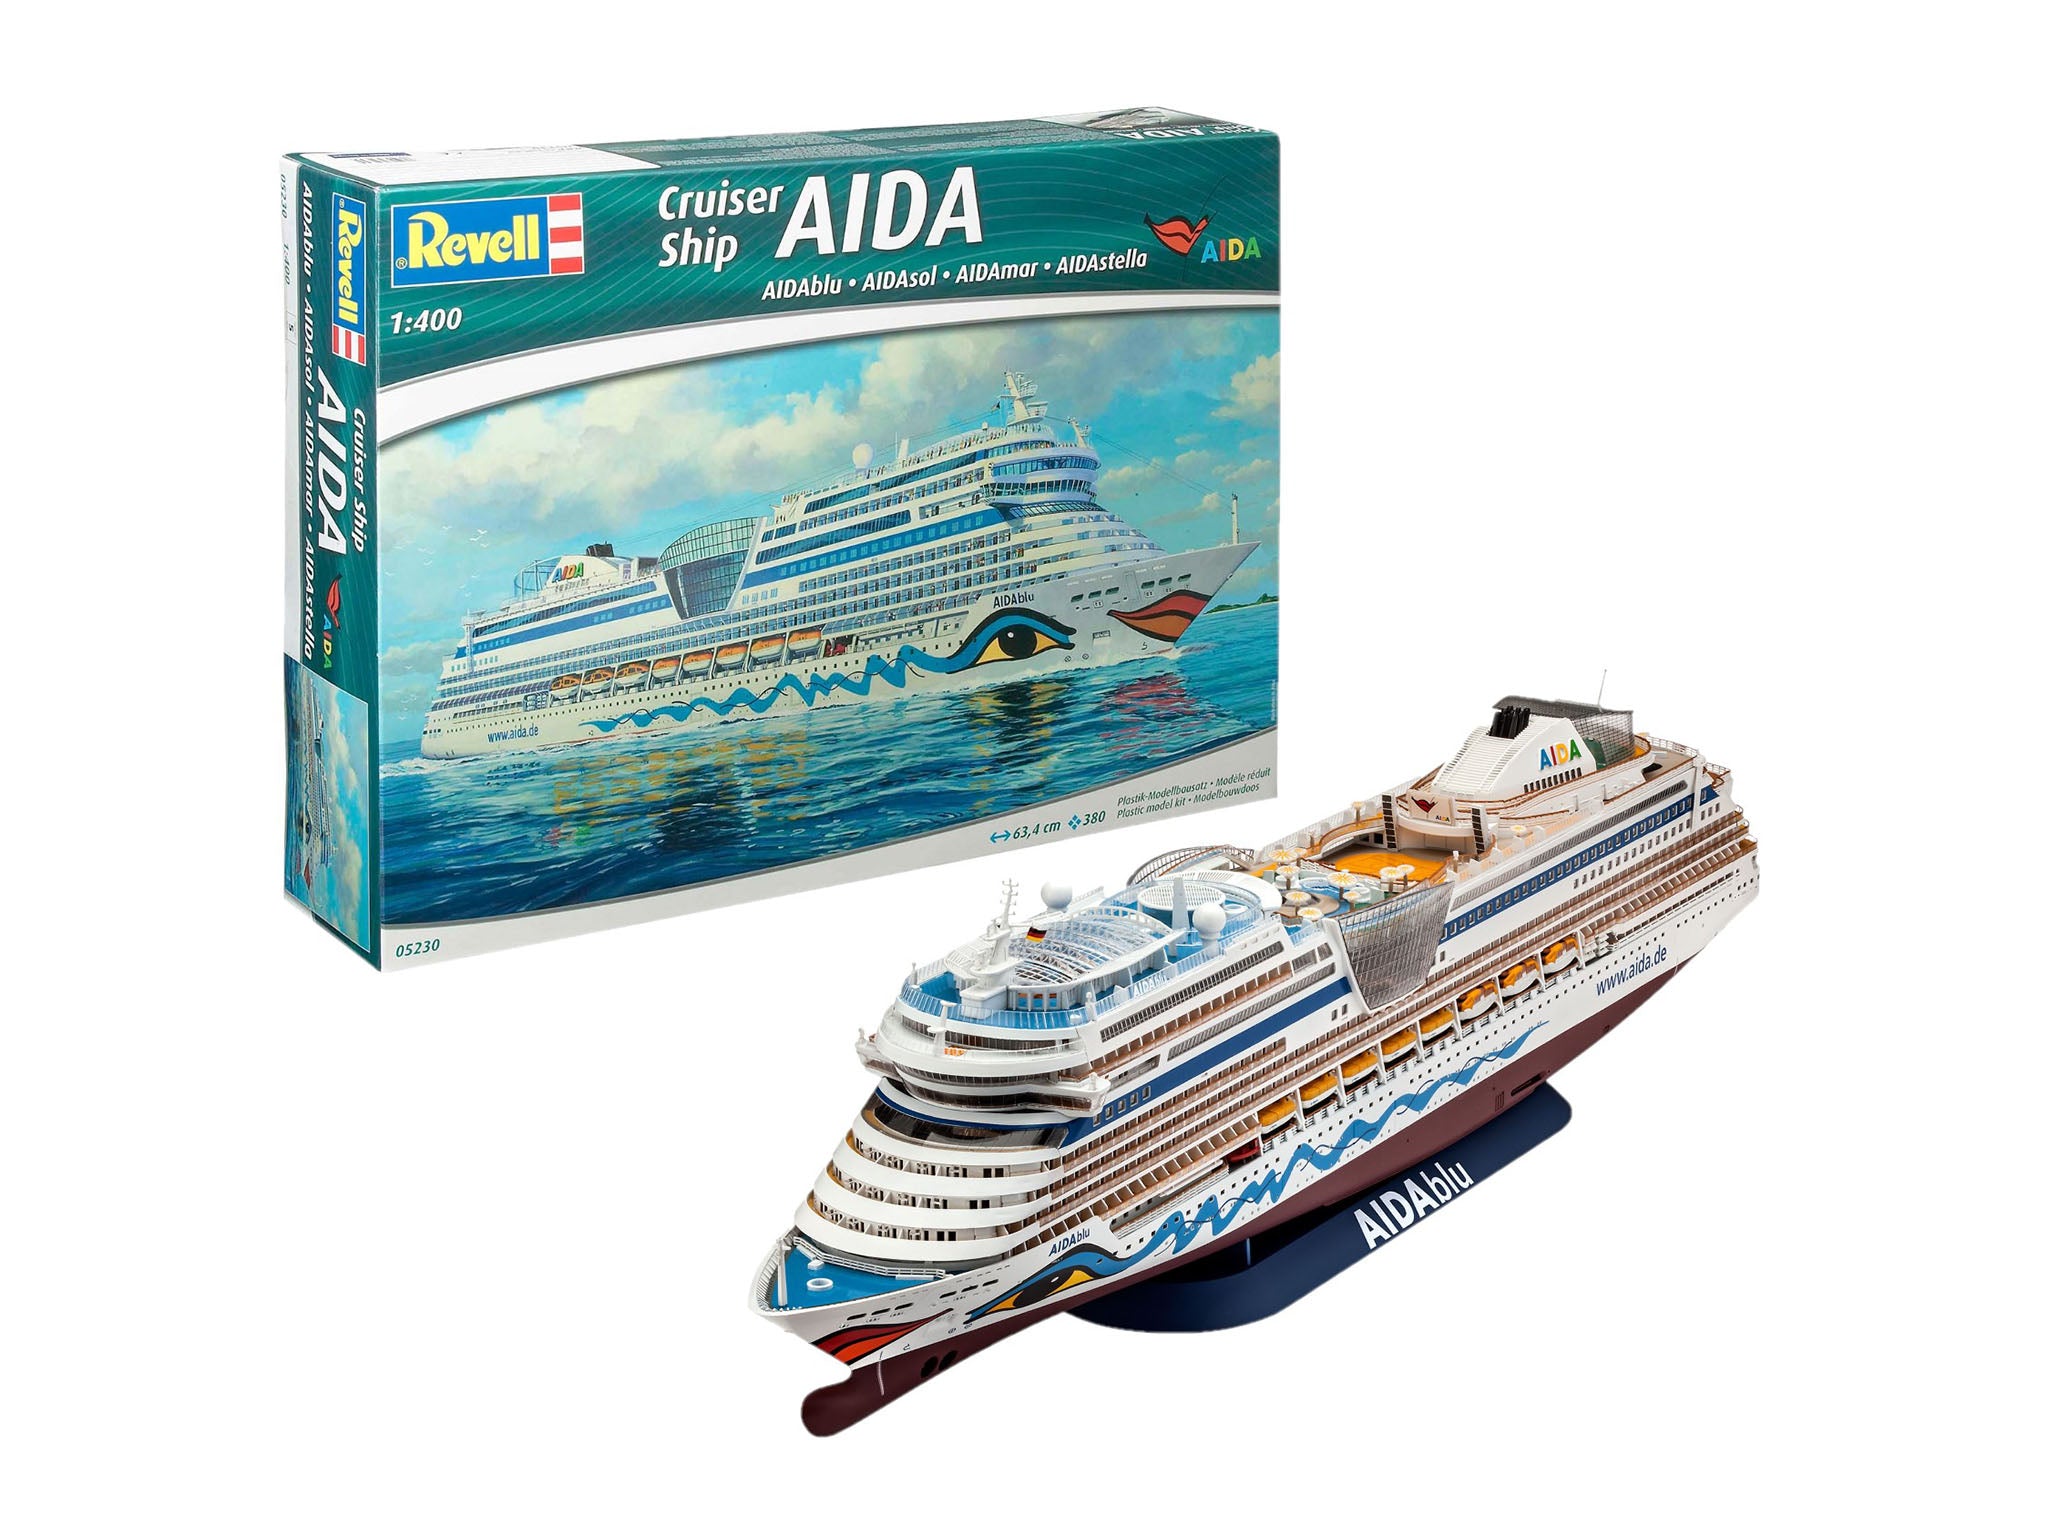 Warship Model Kit Revell Cruise Ship AIDA AIDAblu sol mar or stella 1:400